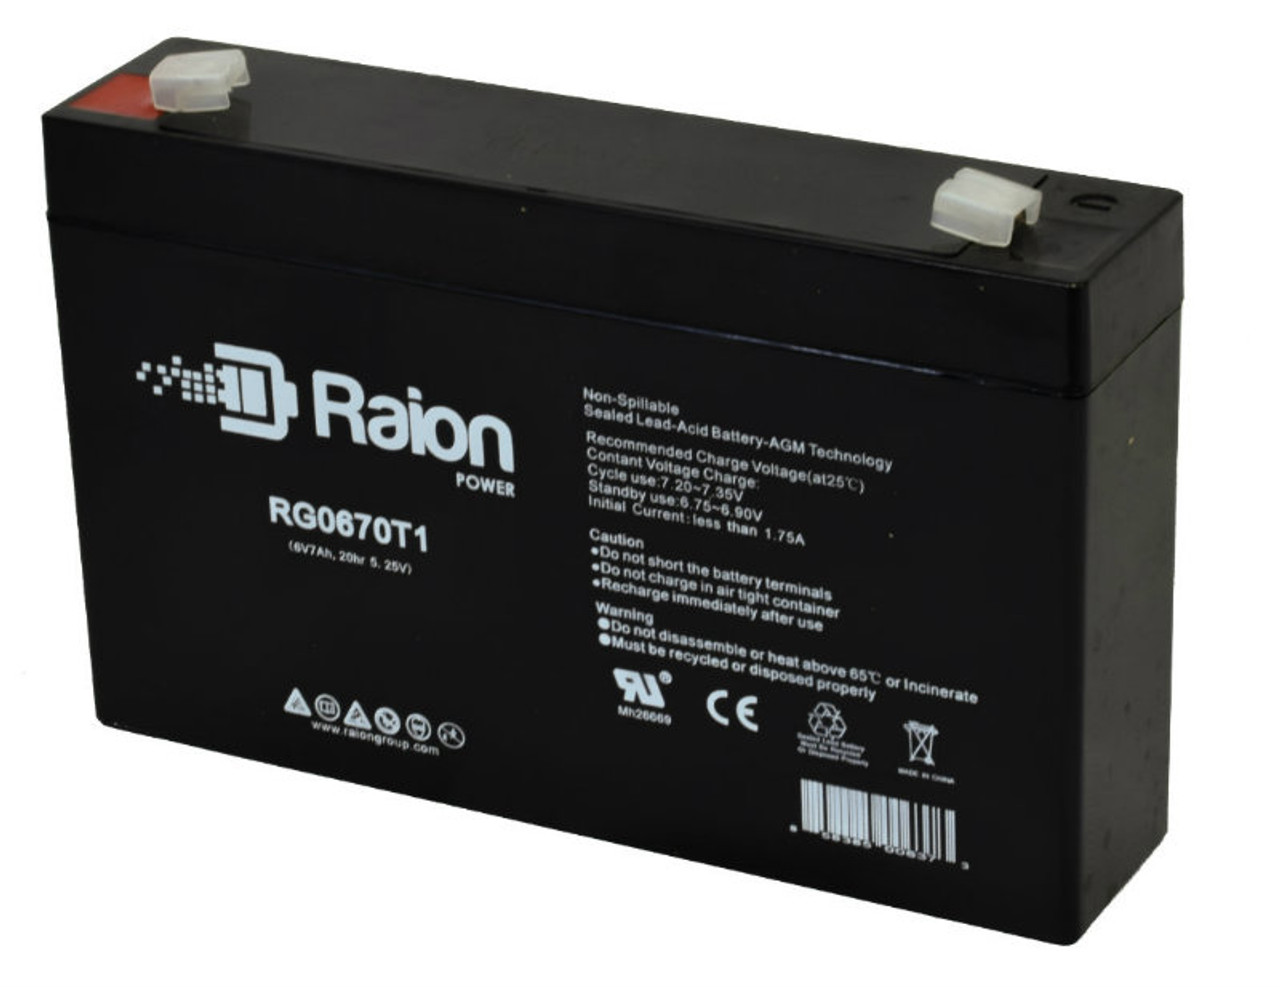 Raion Power RG0670T1 6V 7Ah Replacement Emergency Lighting Battery for Lightalarms E8